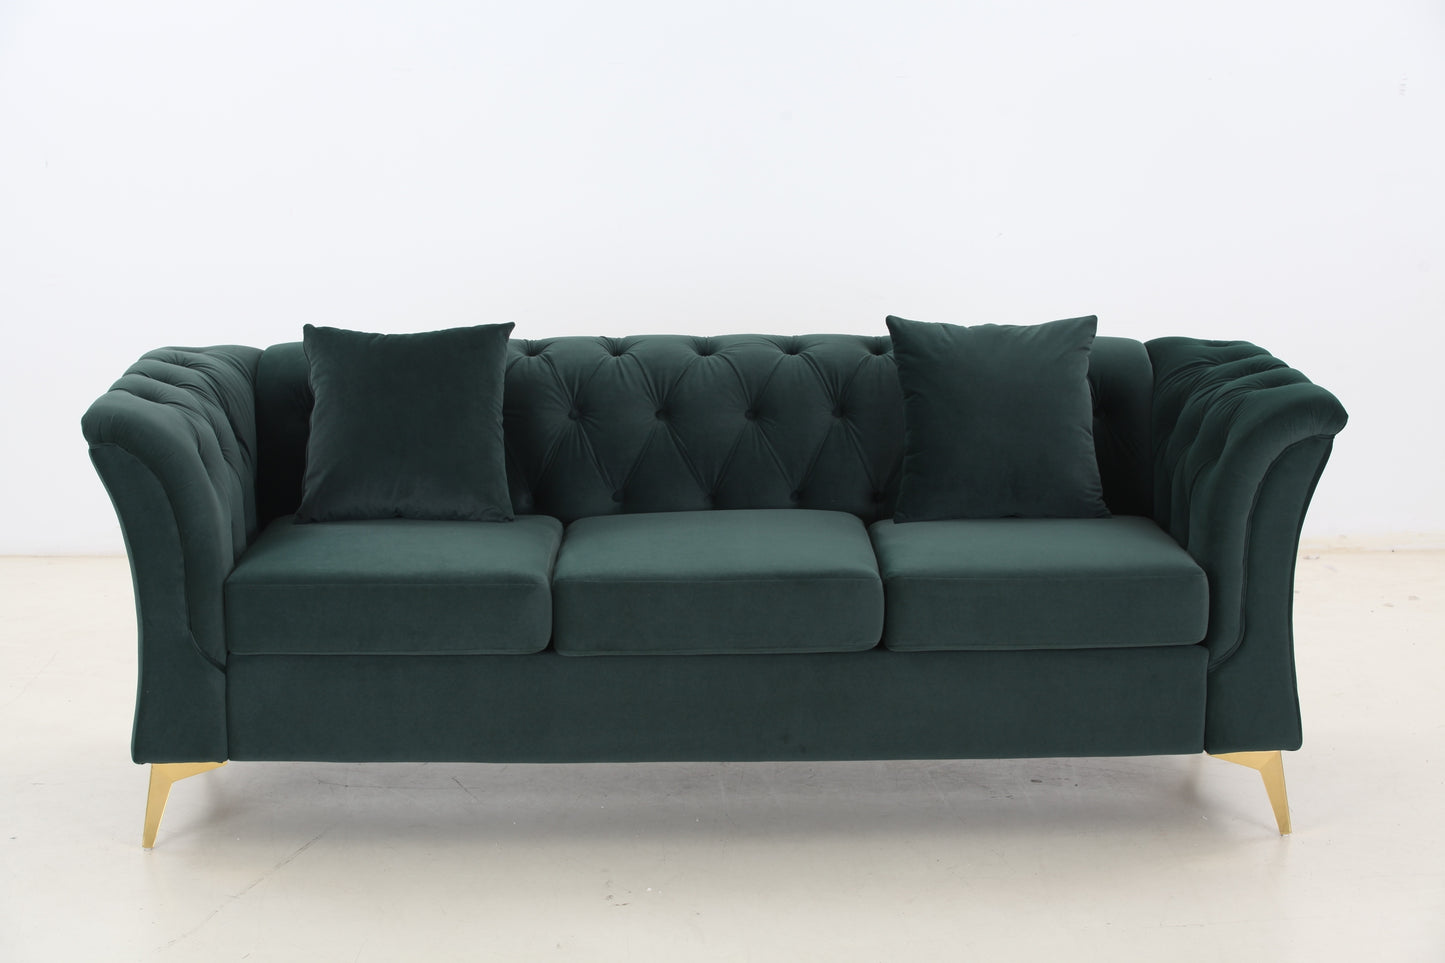 Modern Tufted Chesterfield Sofa in Green Velvet with Gold Legs